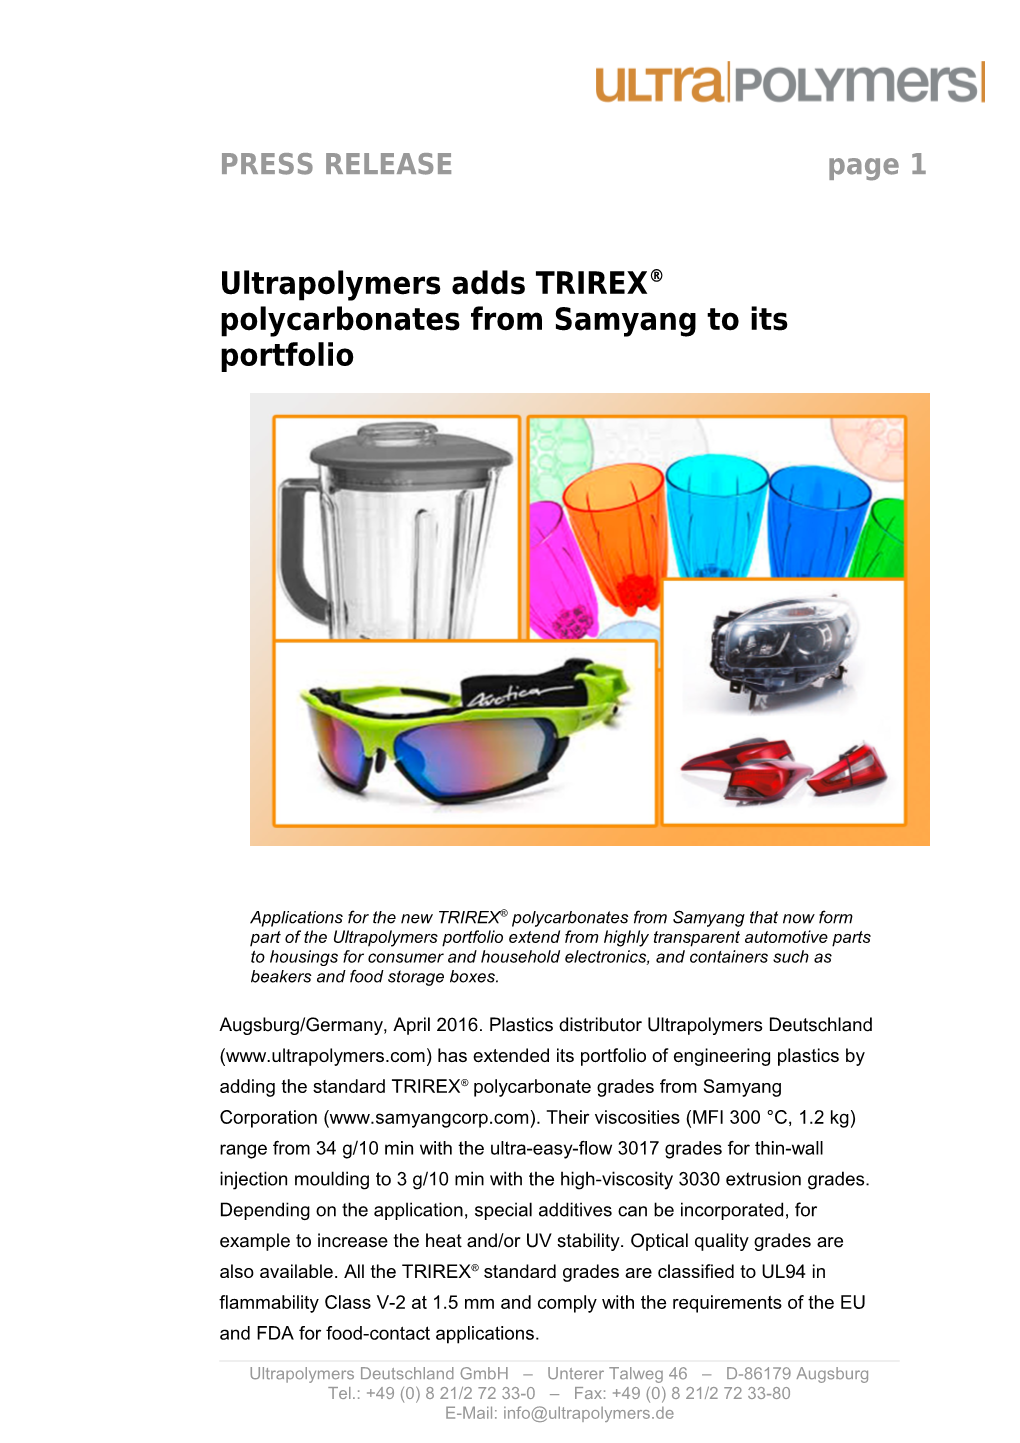 Ultrapolymers Adds TRIREX Polycarbonates from Samyangto Its Portfolio